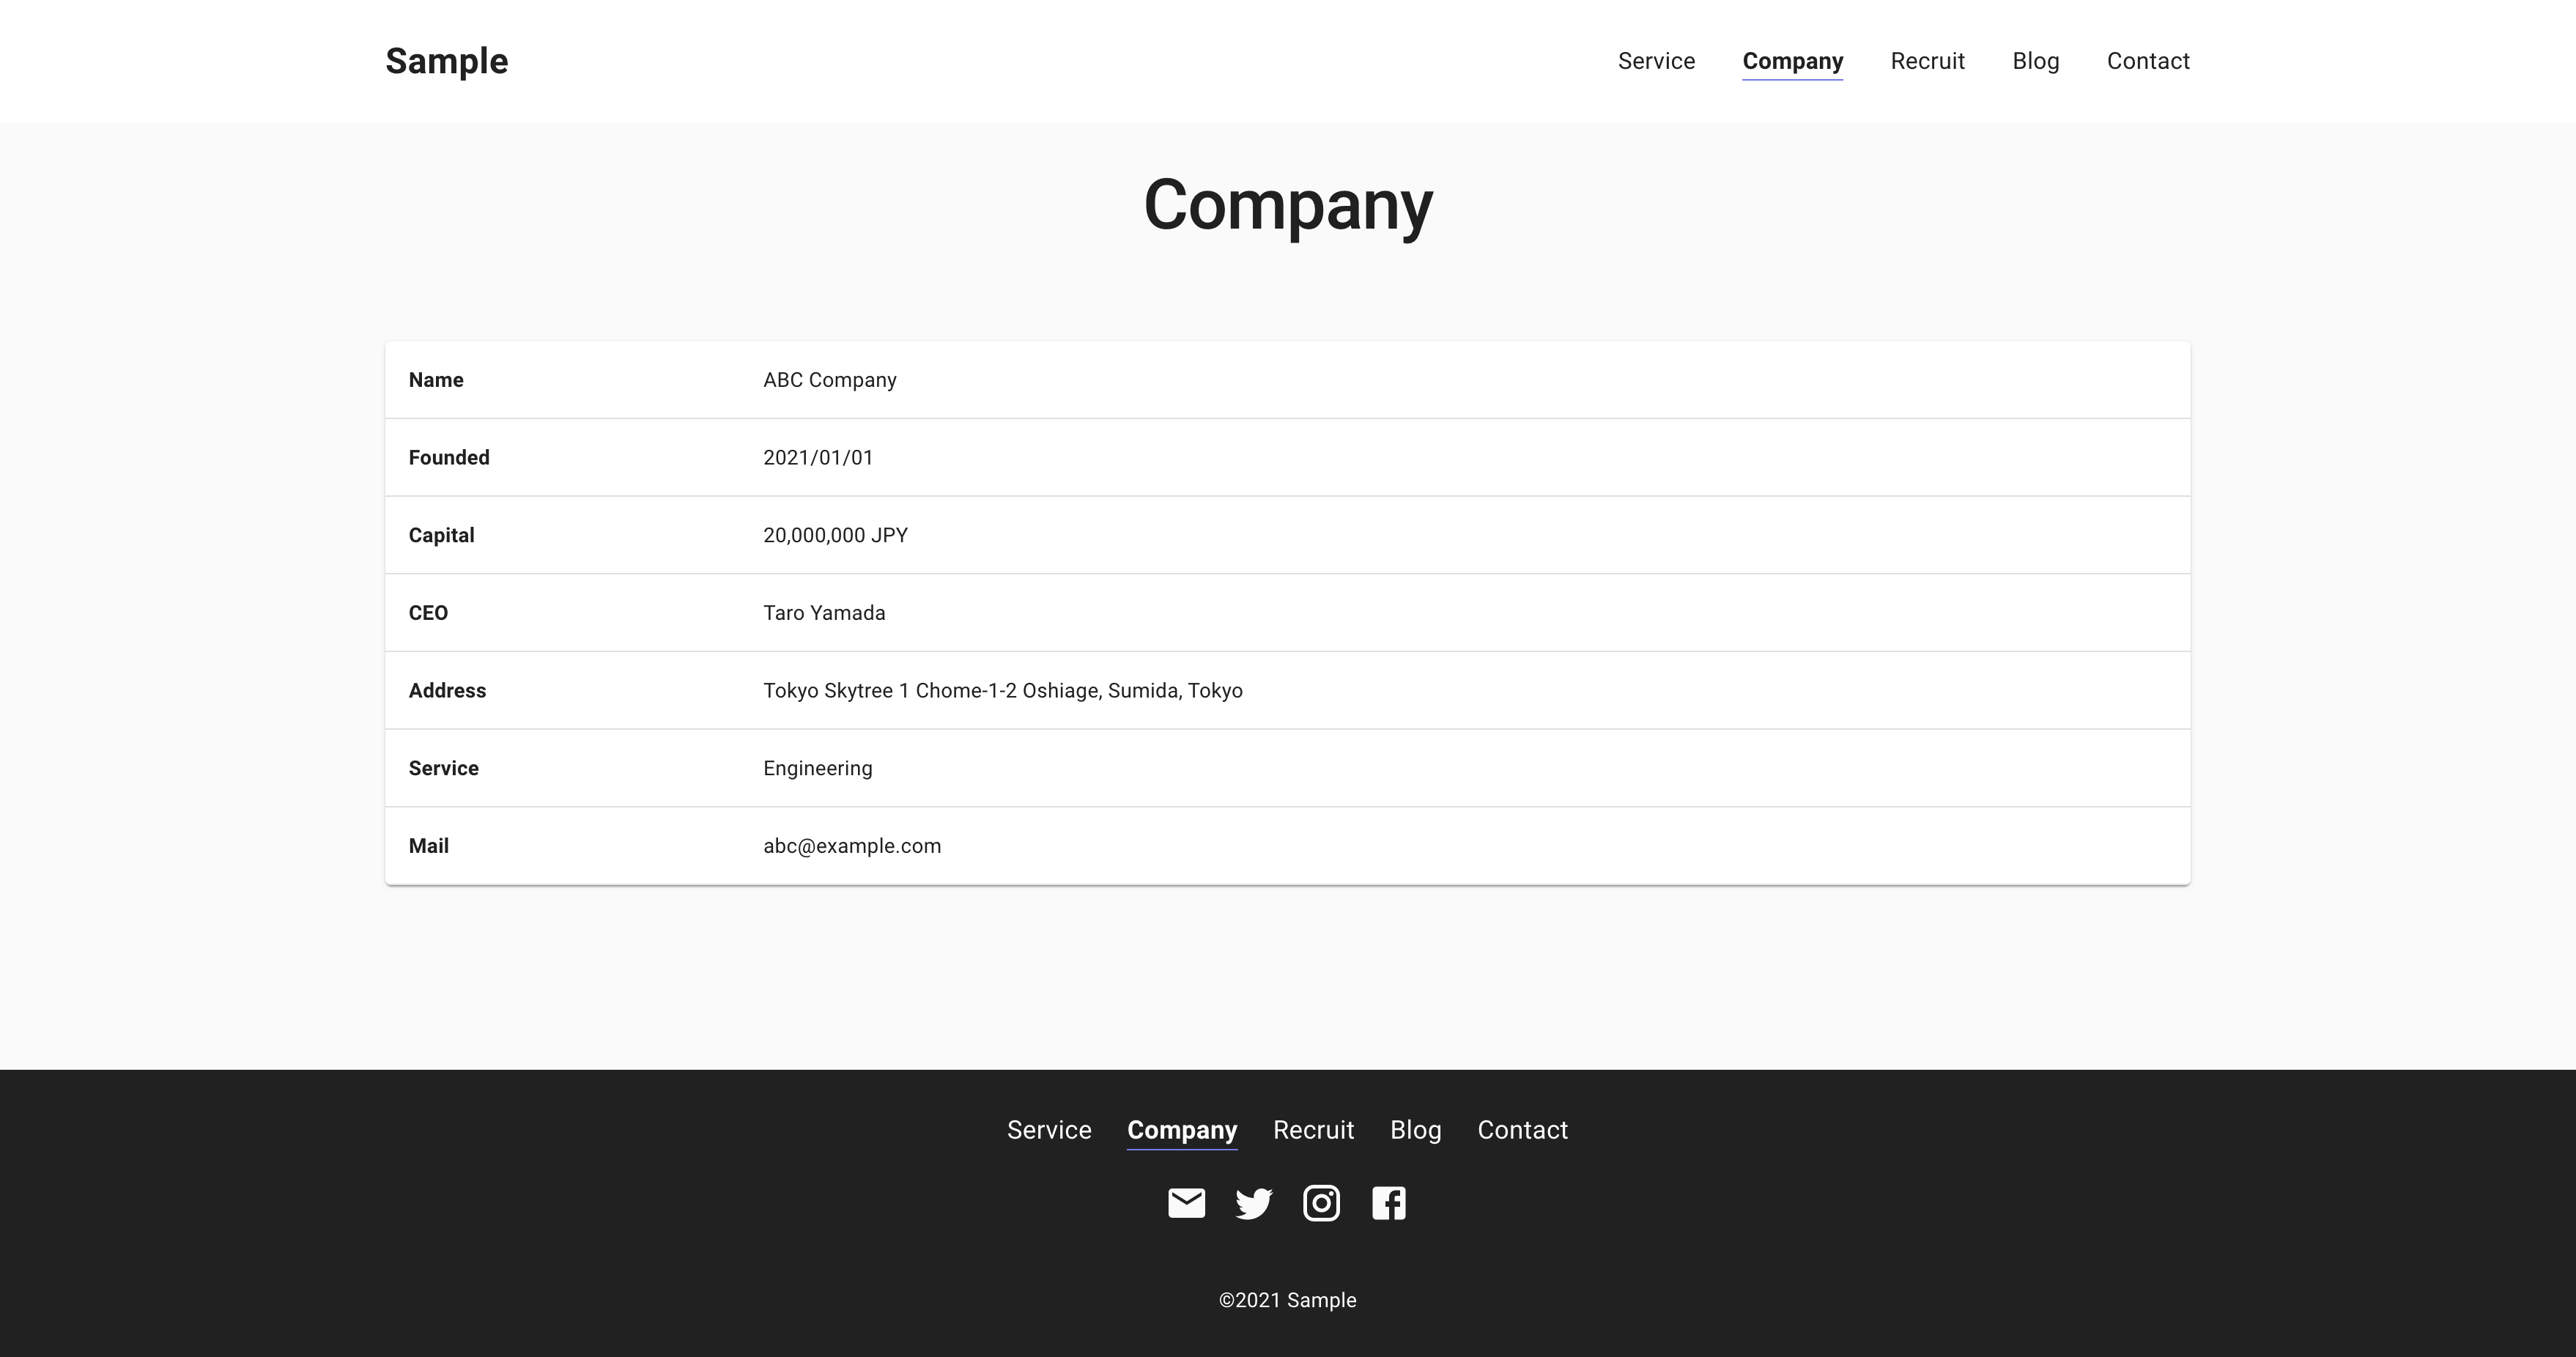 FireShot Capture 085 - Company - Corporate Site Sample - corporate-site-sample.vercel.app.png